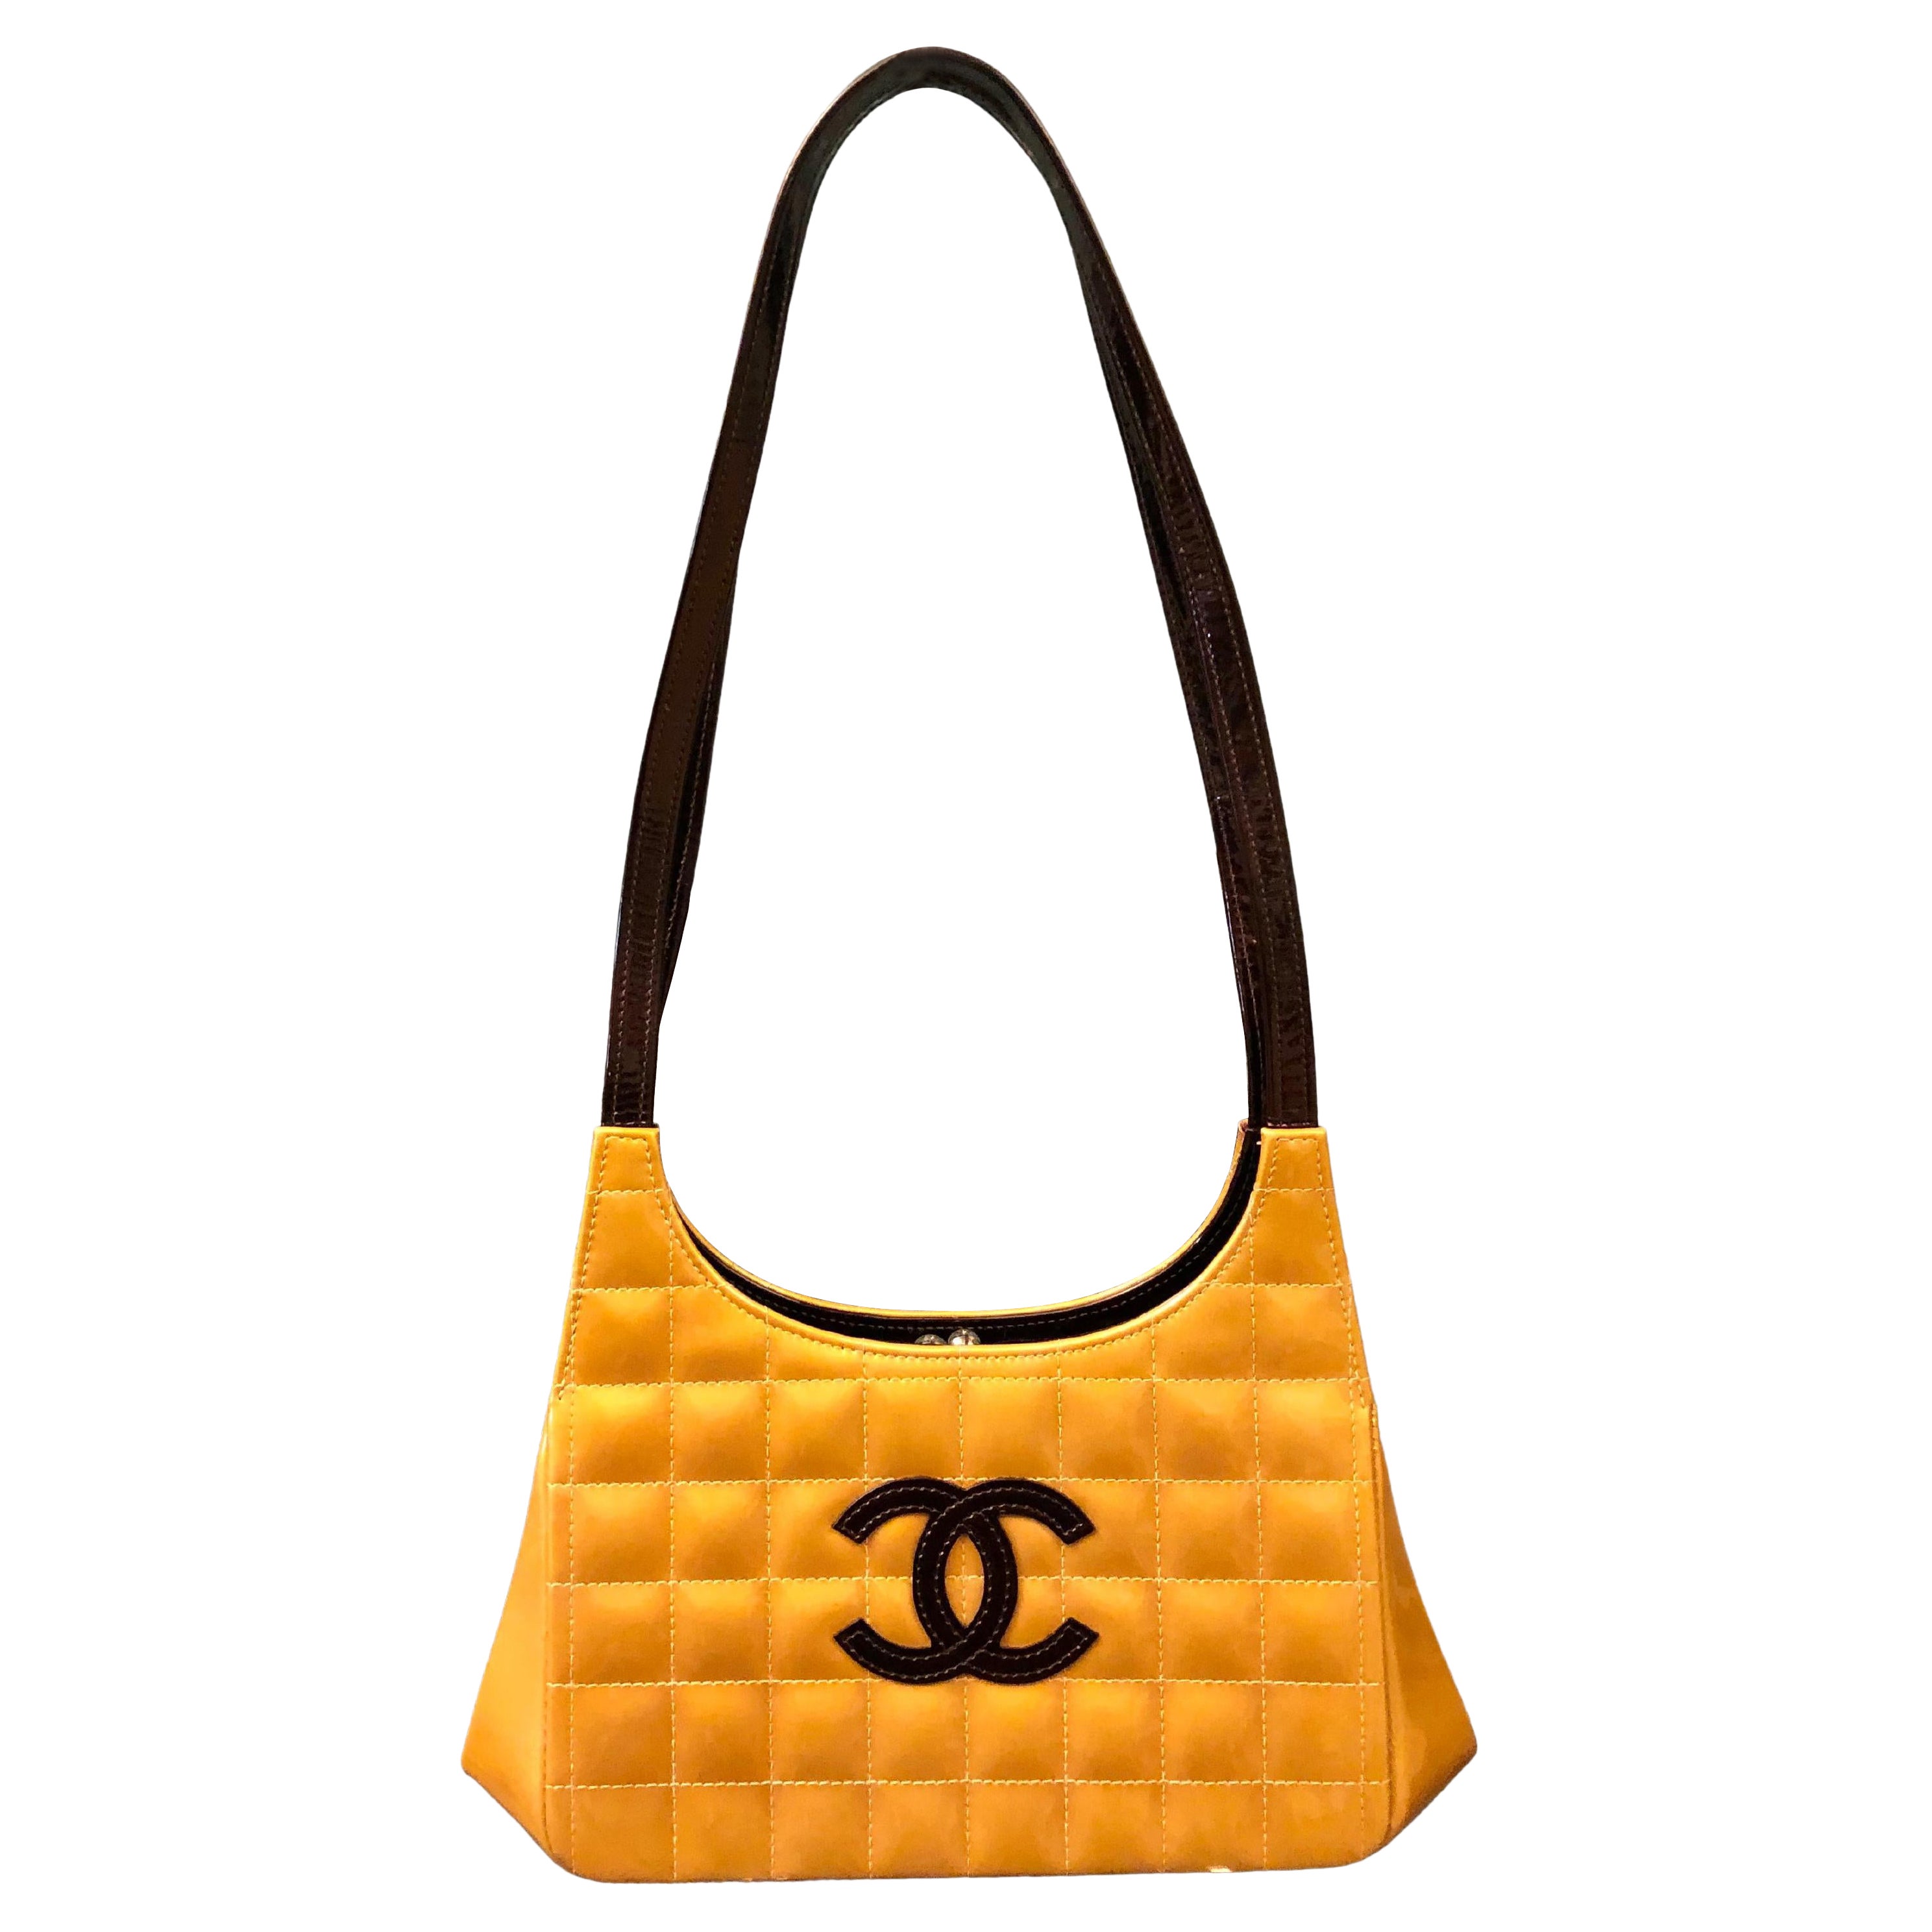 Chanel Yellow Patent “CC” Handbag  For Sale